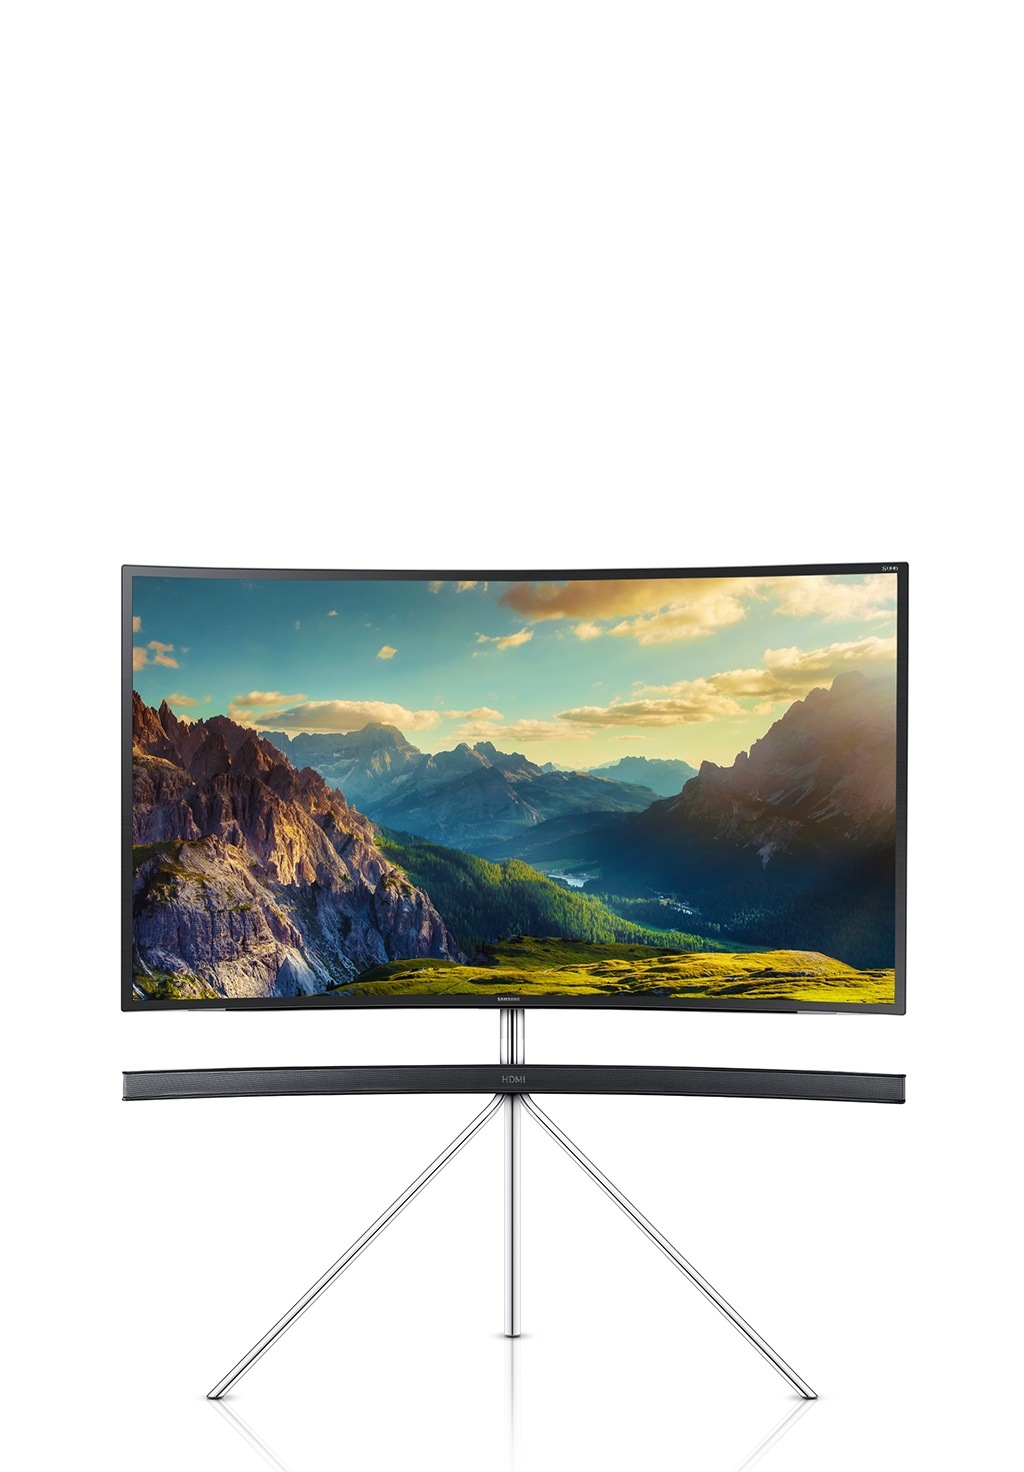 Samsung | TV | TV-tilbehør | Gulvfod til UHD VG-SMN2500J | Samsung Danmark